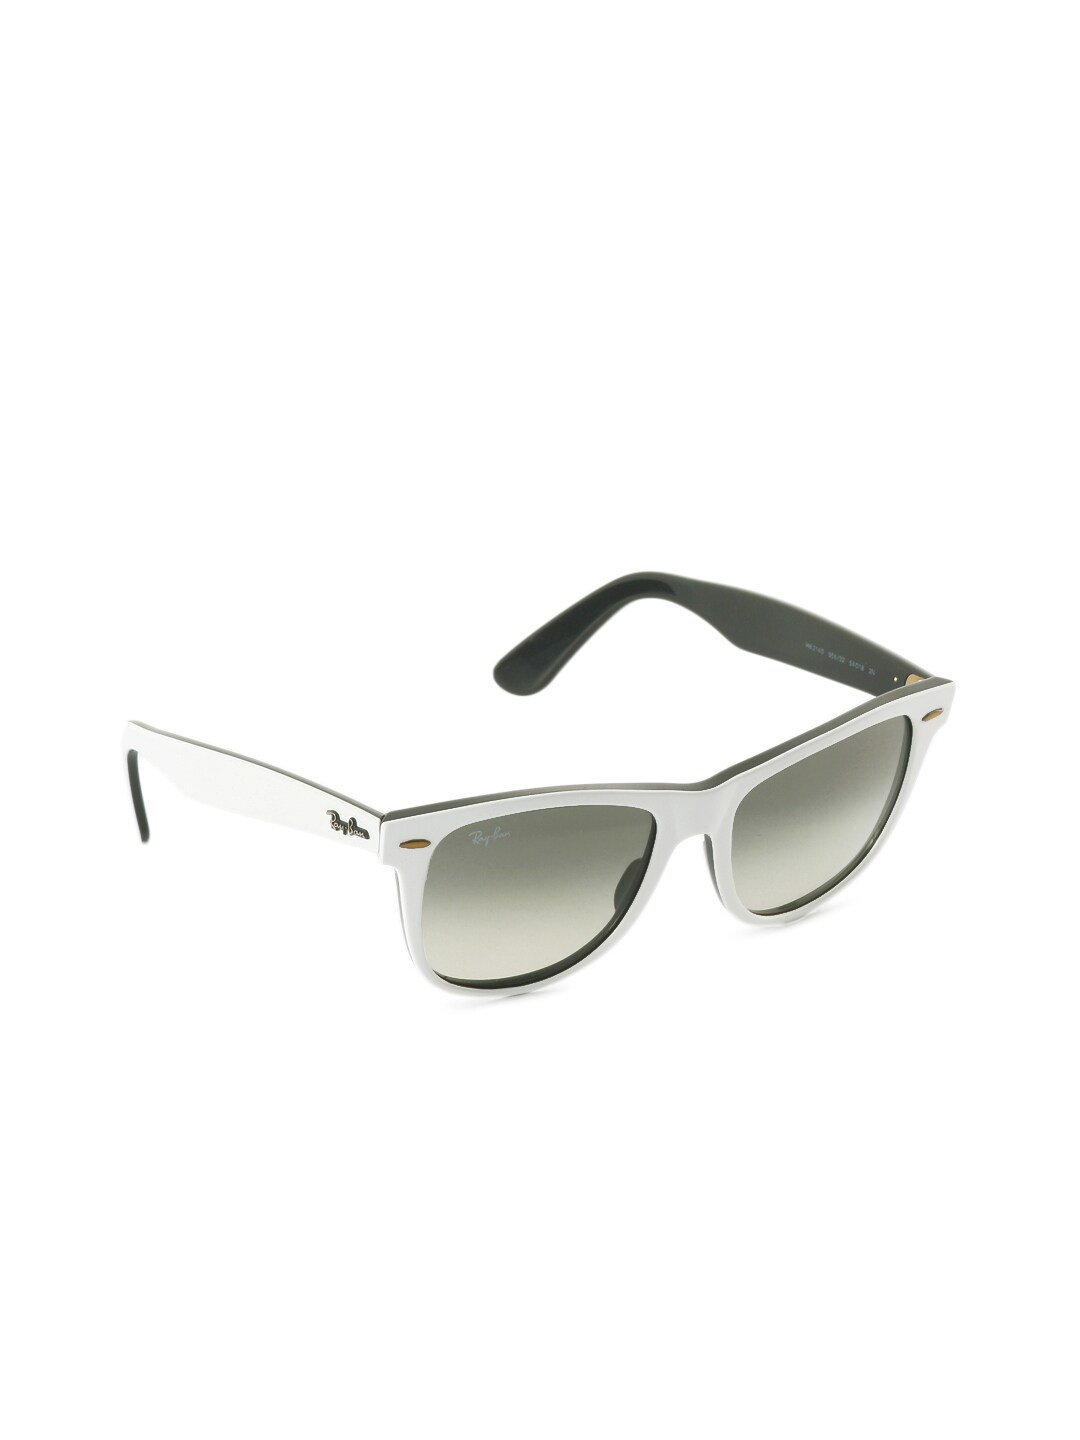 Ray-Ban Men New Wayfarer White Sunglasses